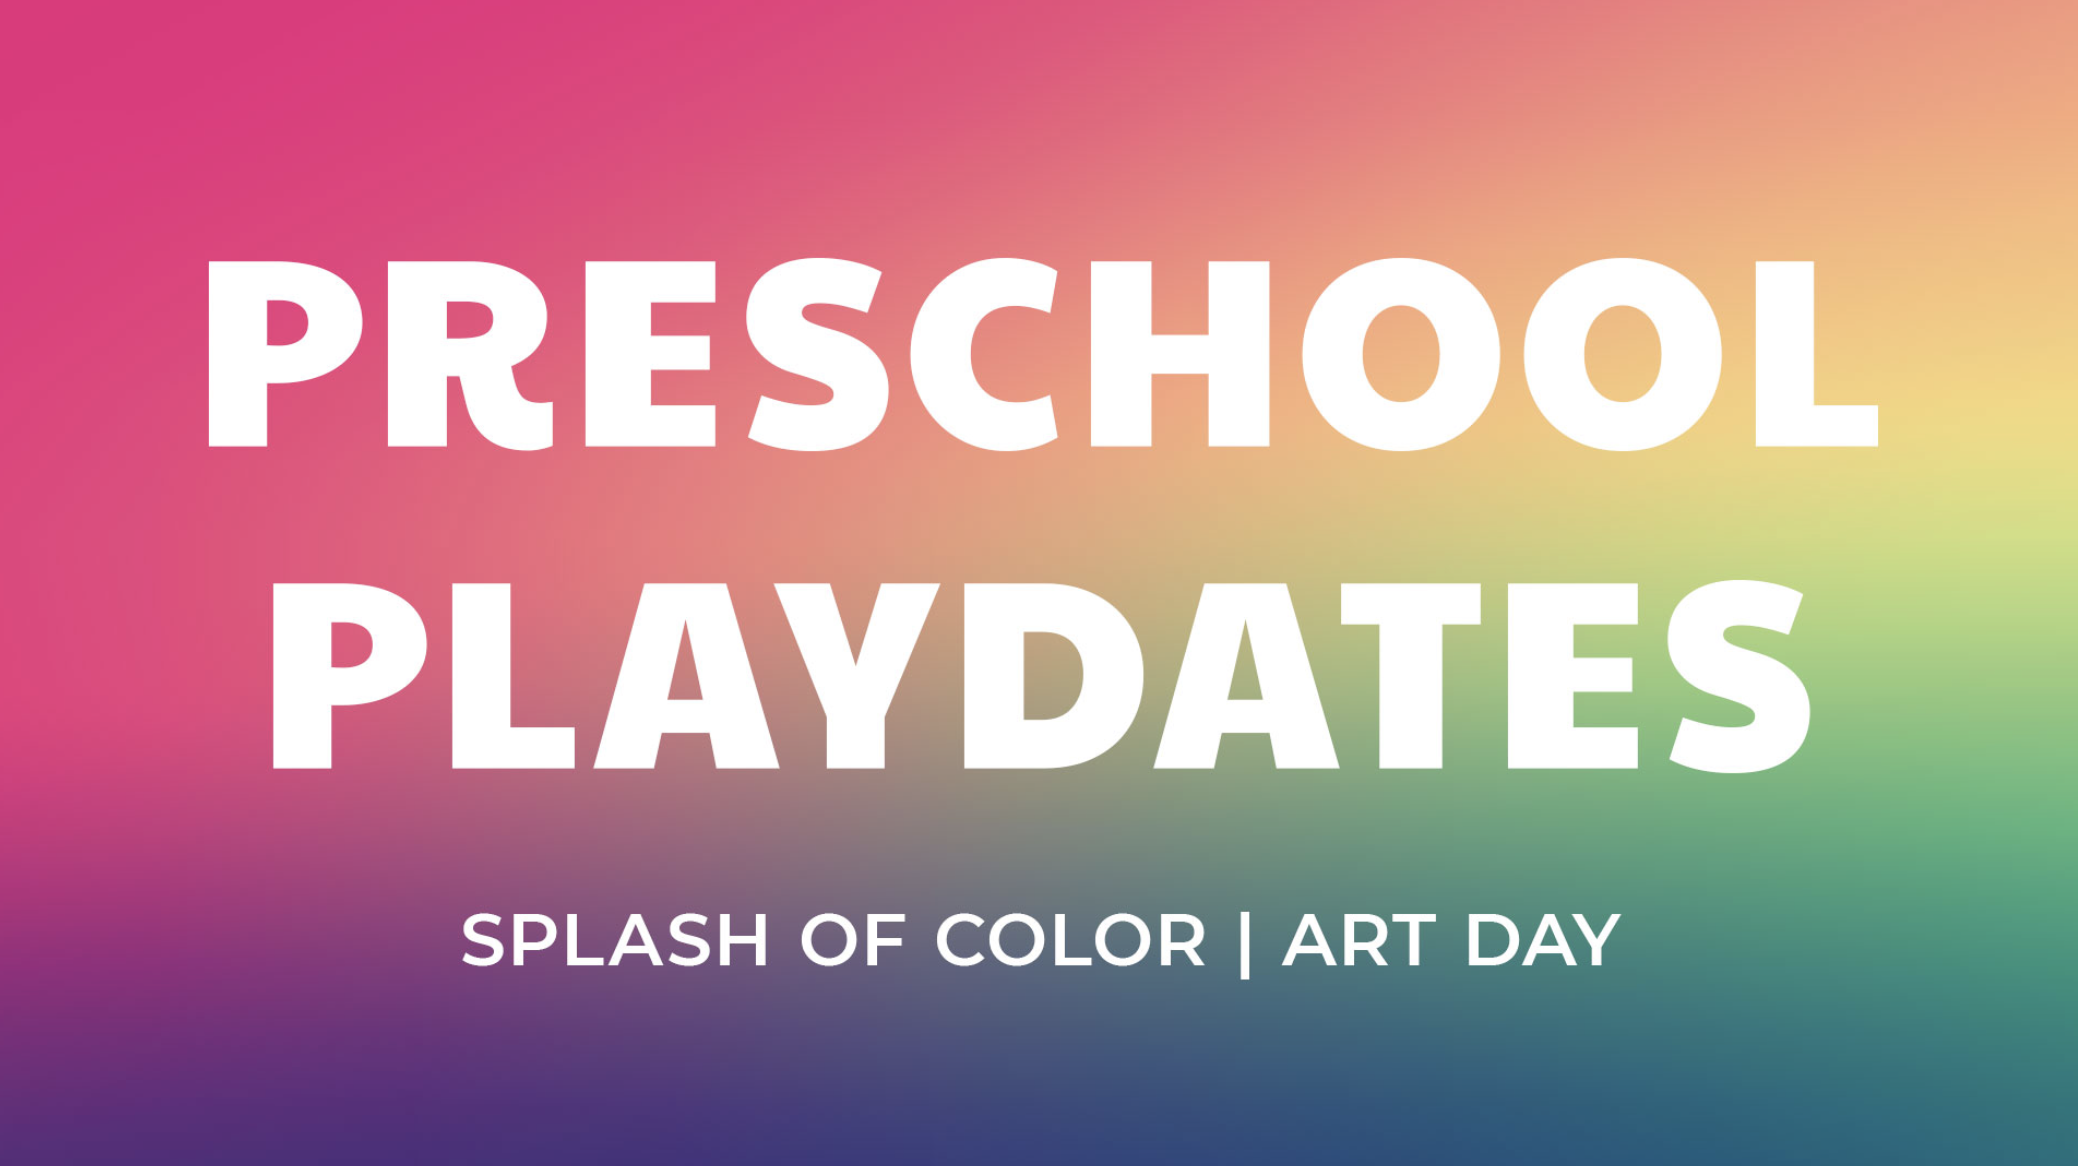 Cottonwood Creek Church - Preschool Playdates: Splash of Color Art Day